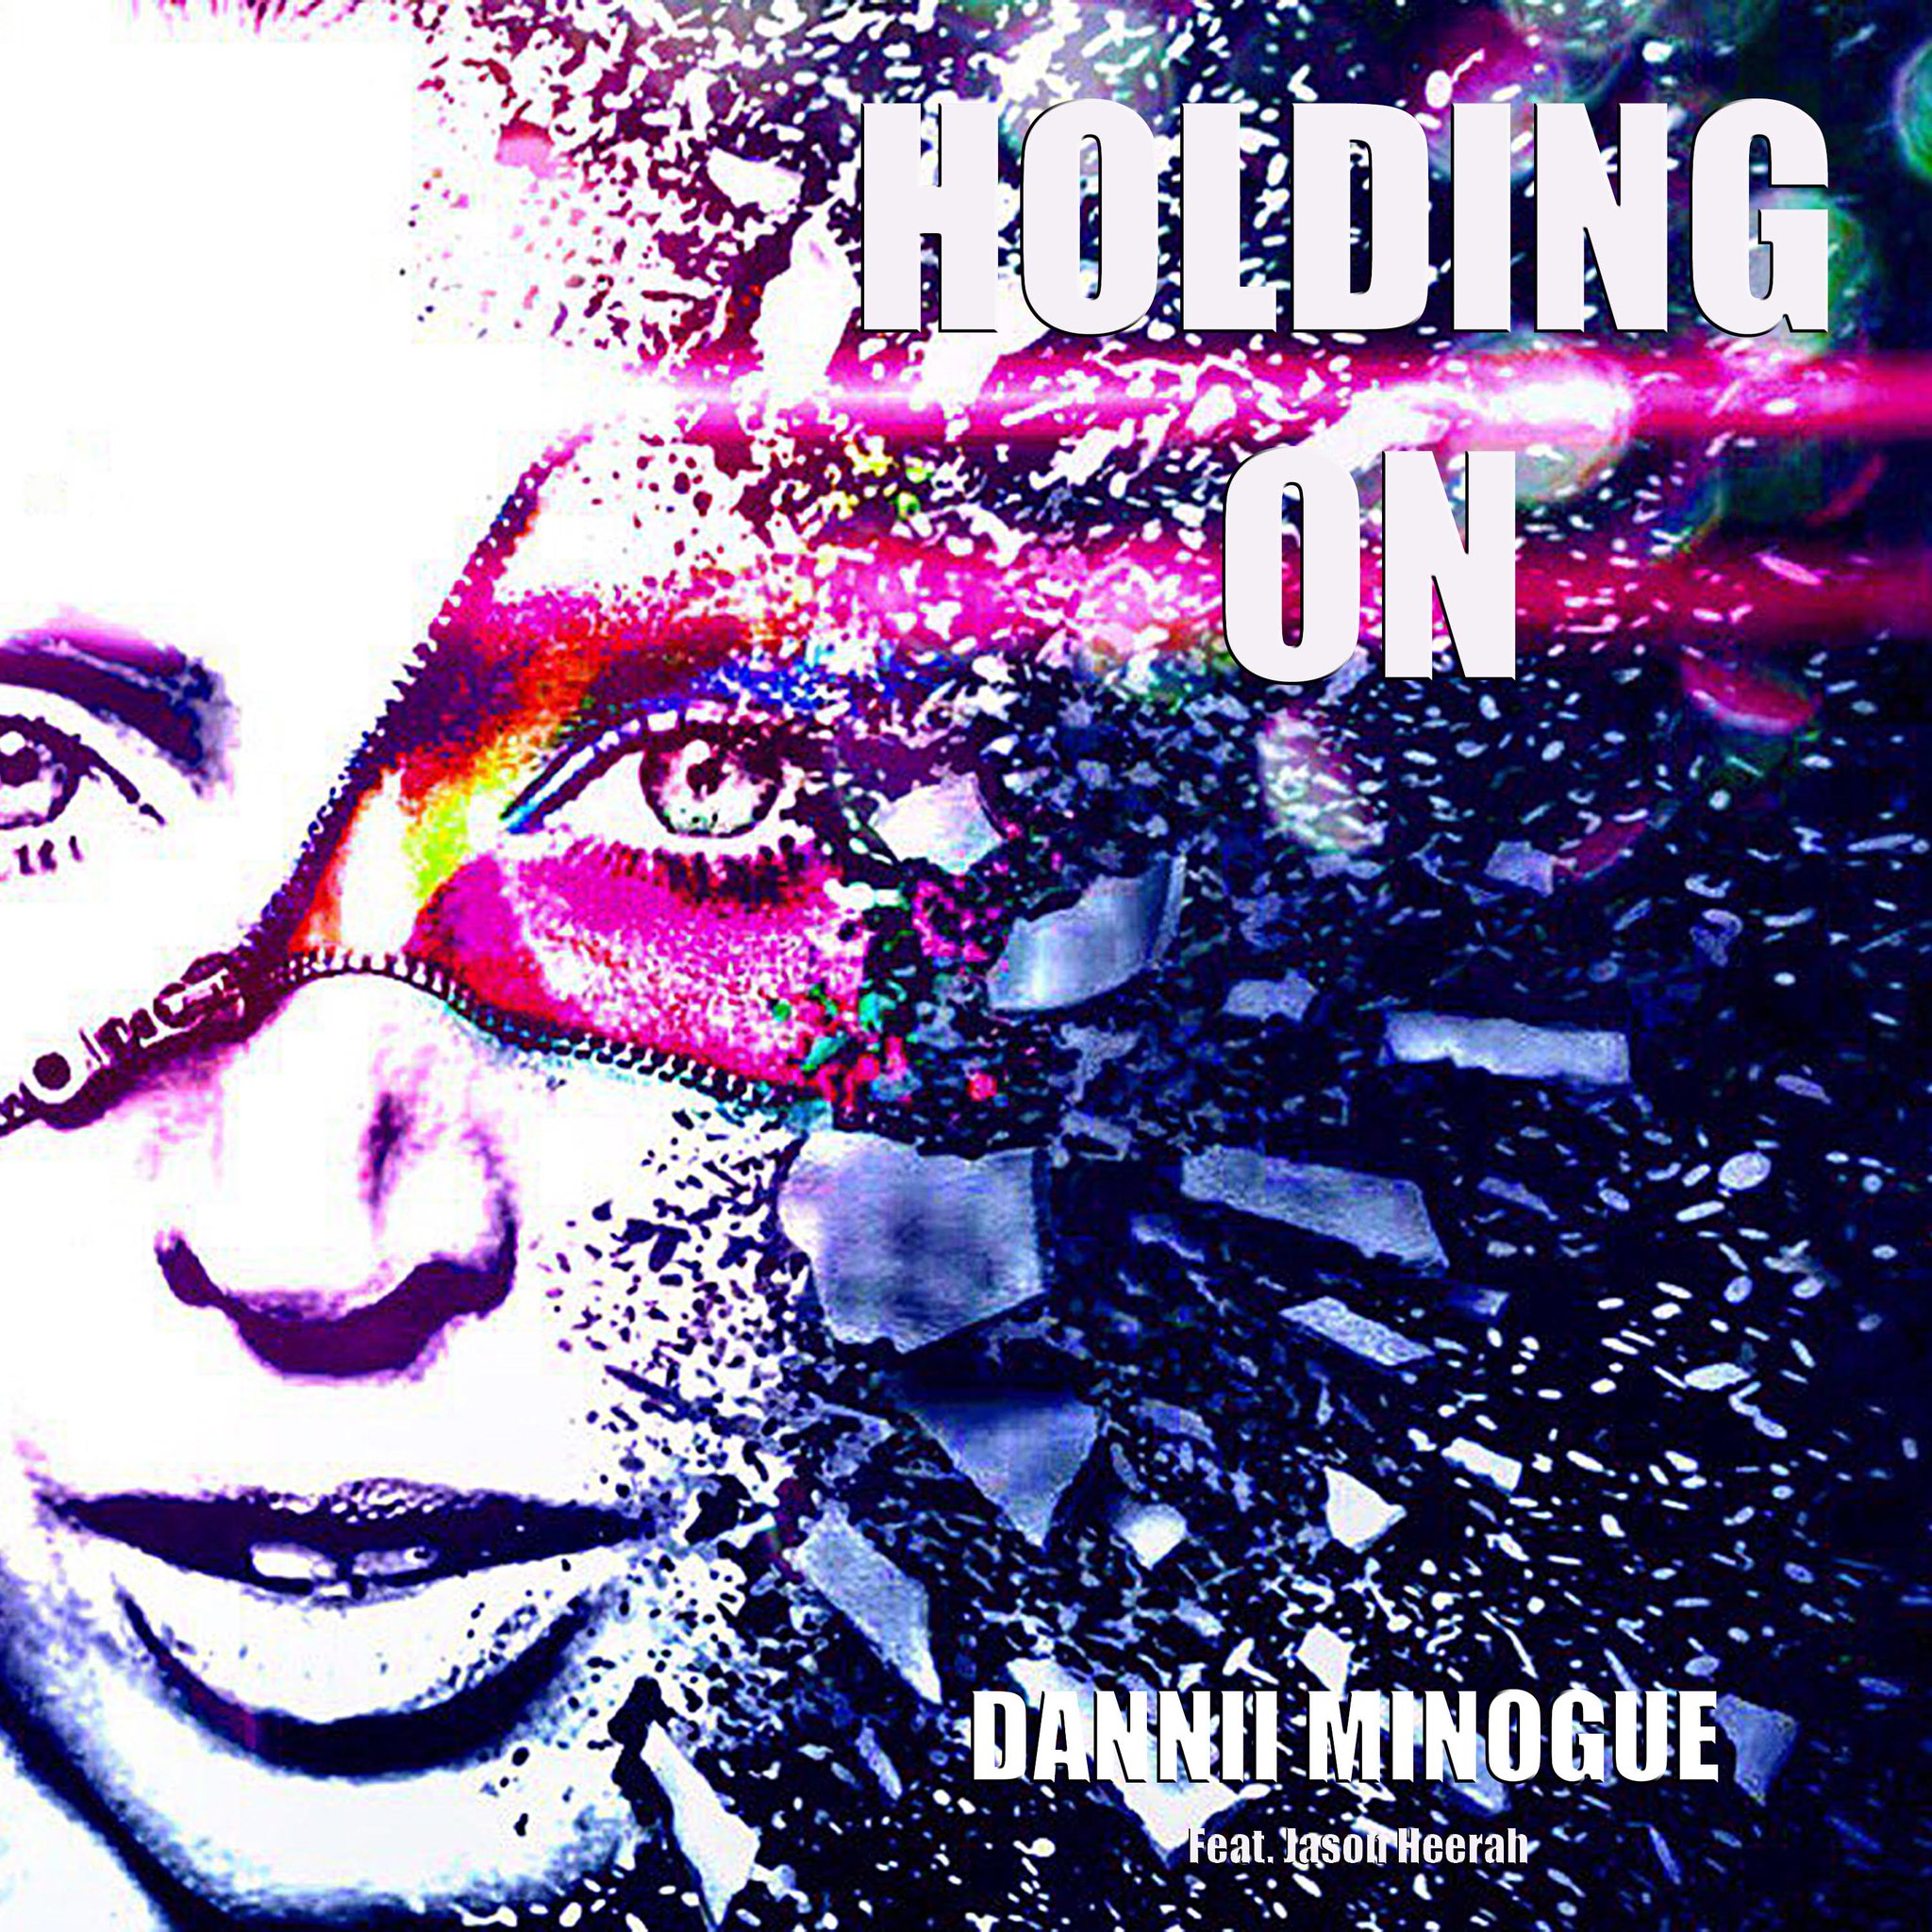 Dannii Minogue featuring Jason Herrah — Holding On cover artwork